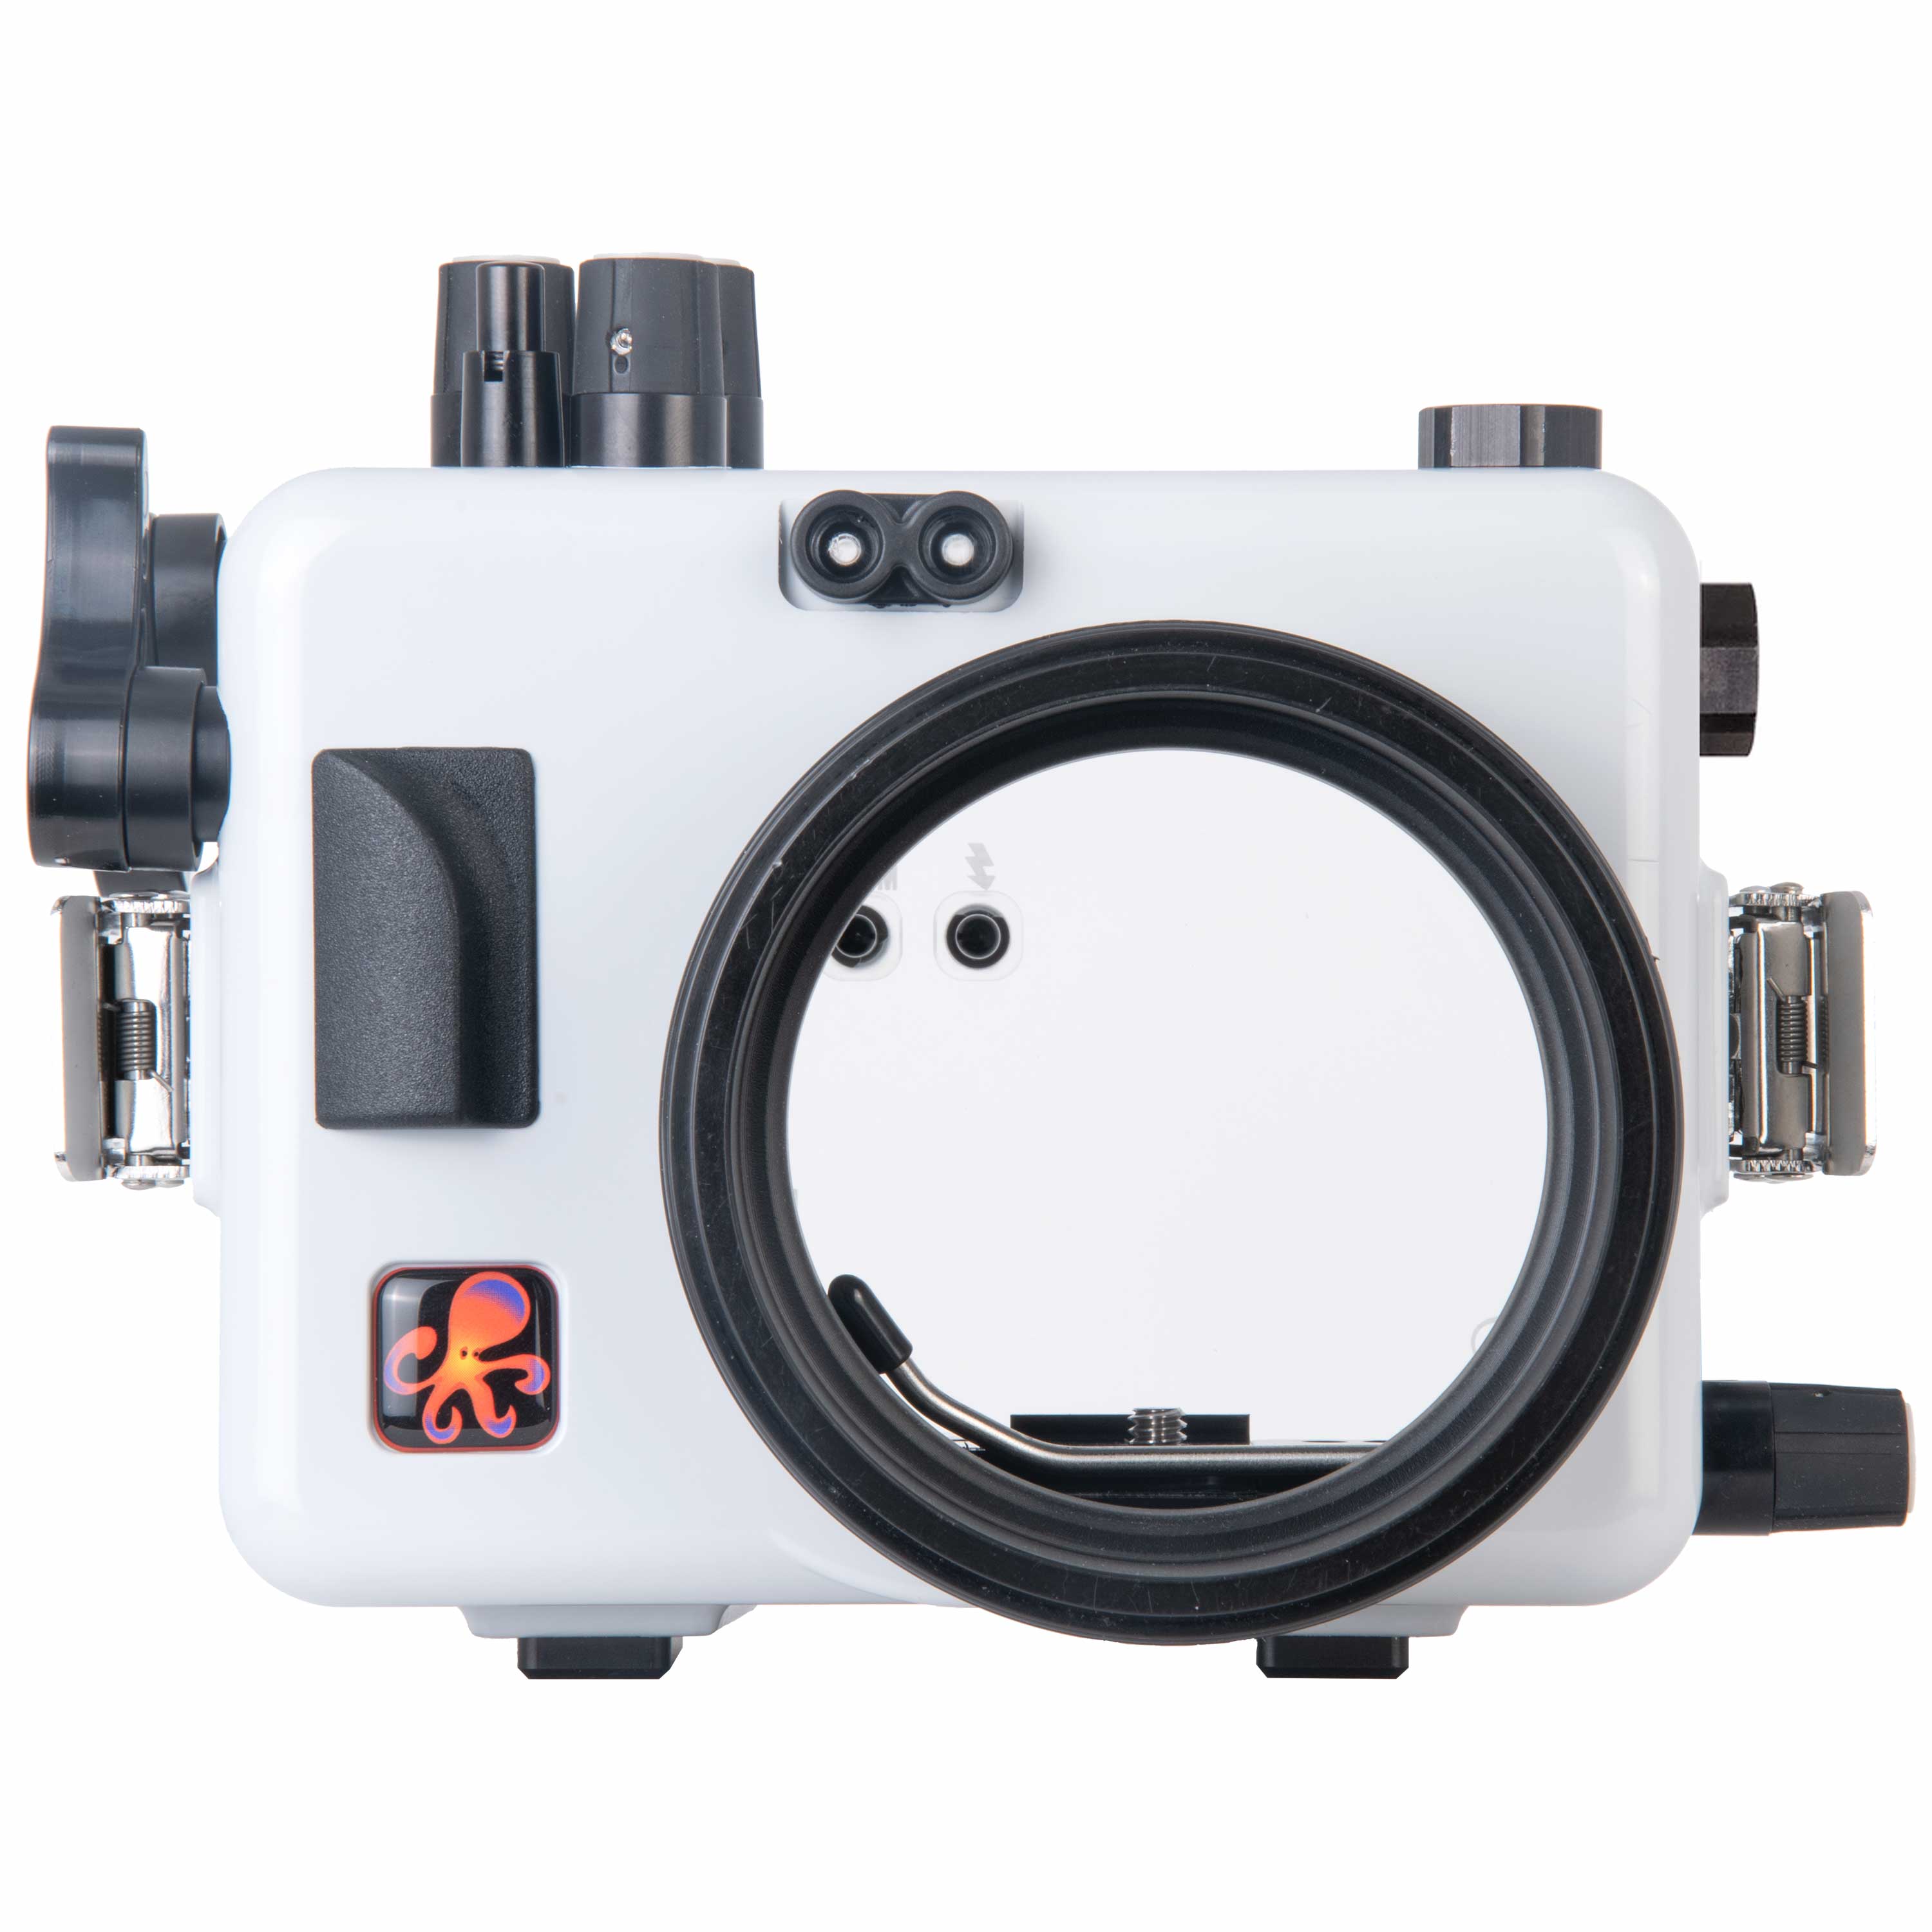 200DLM/A Underwater Housing for Sony Alpha a6000 Mirrorless Cameras